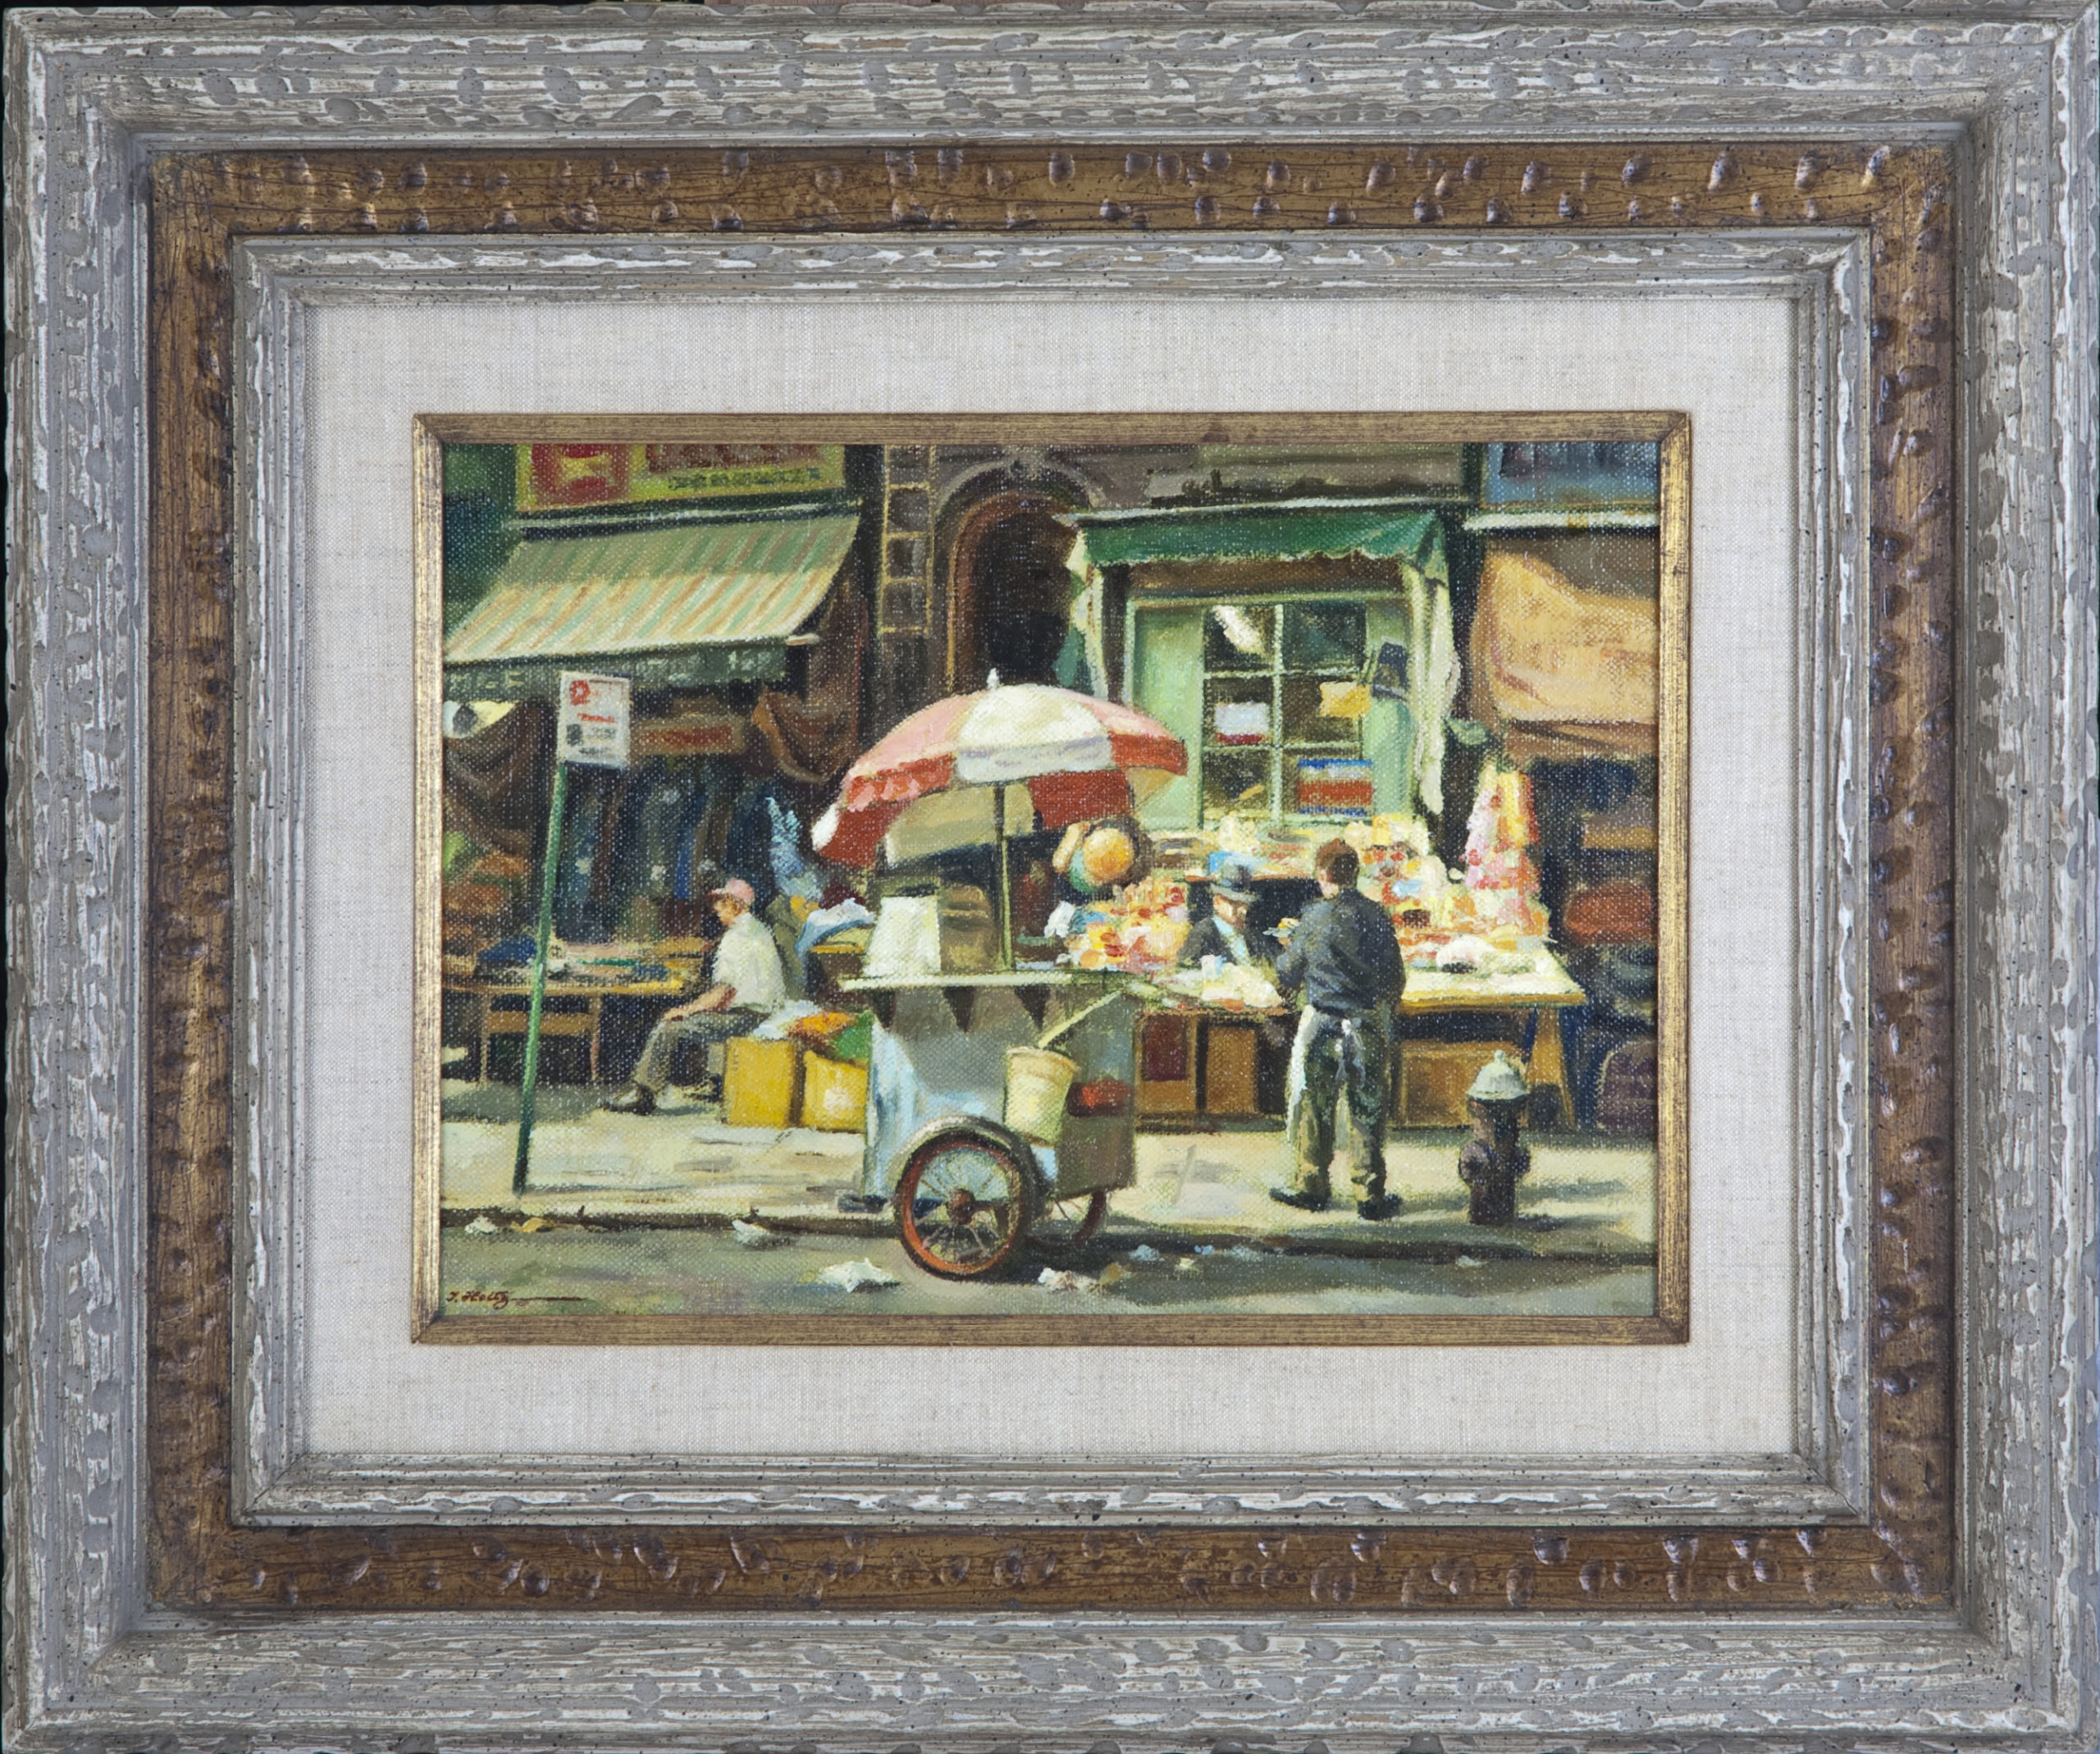 148 Orchard Street 1970 - Oil on Canvas - 14 x 10 - Frame: 23.25 x 19.25 x 2